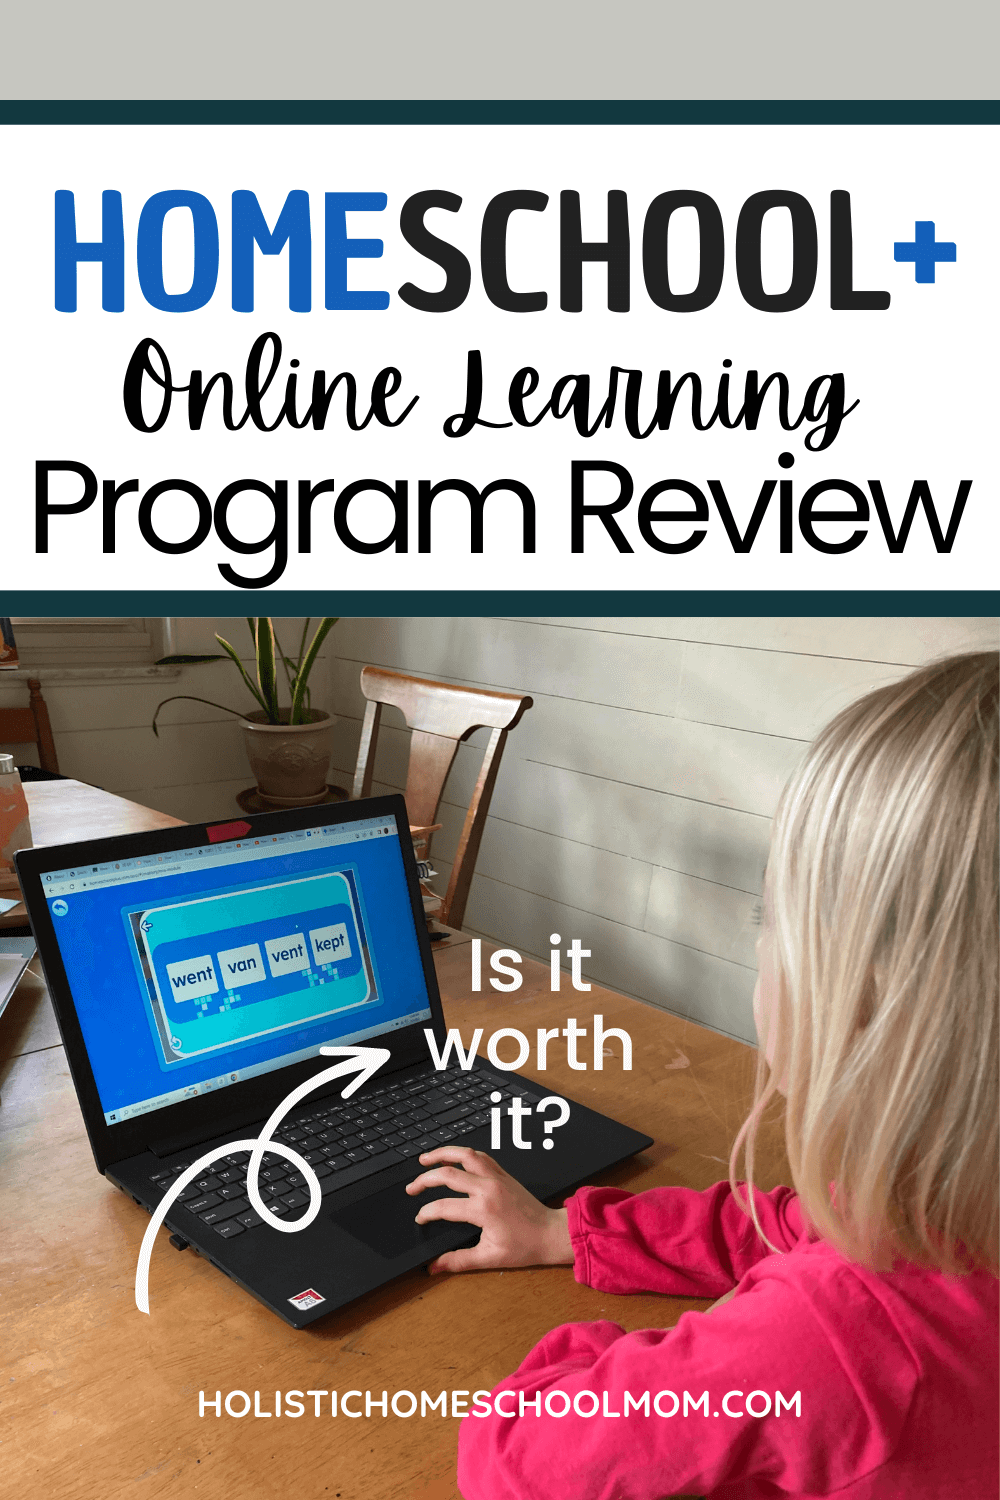 Homeschool+ Online Learning Program Review 